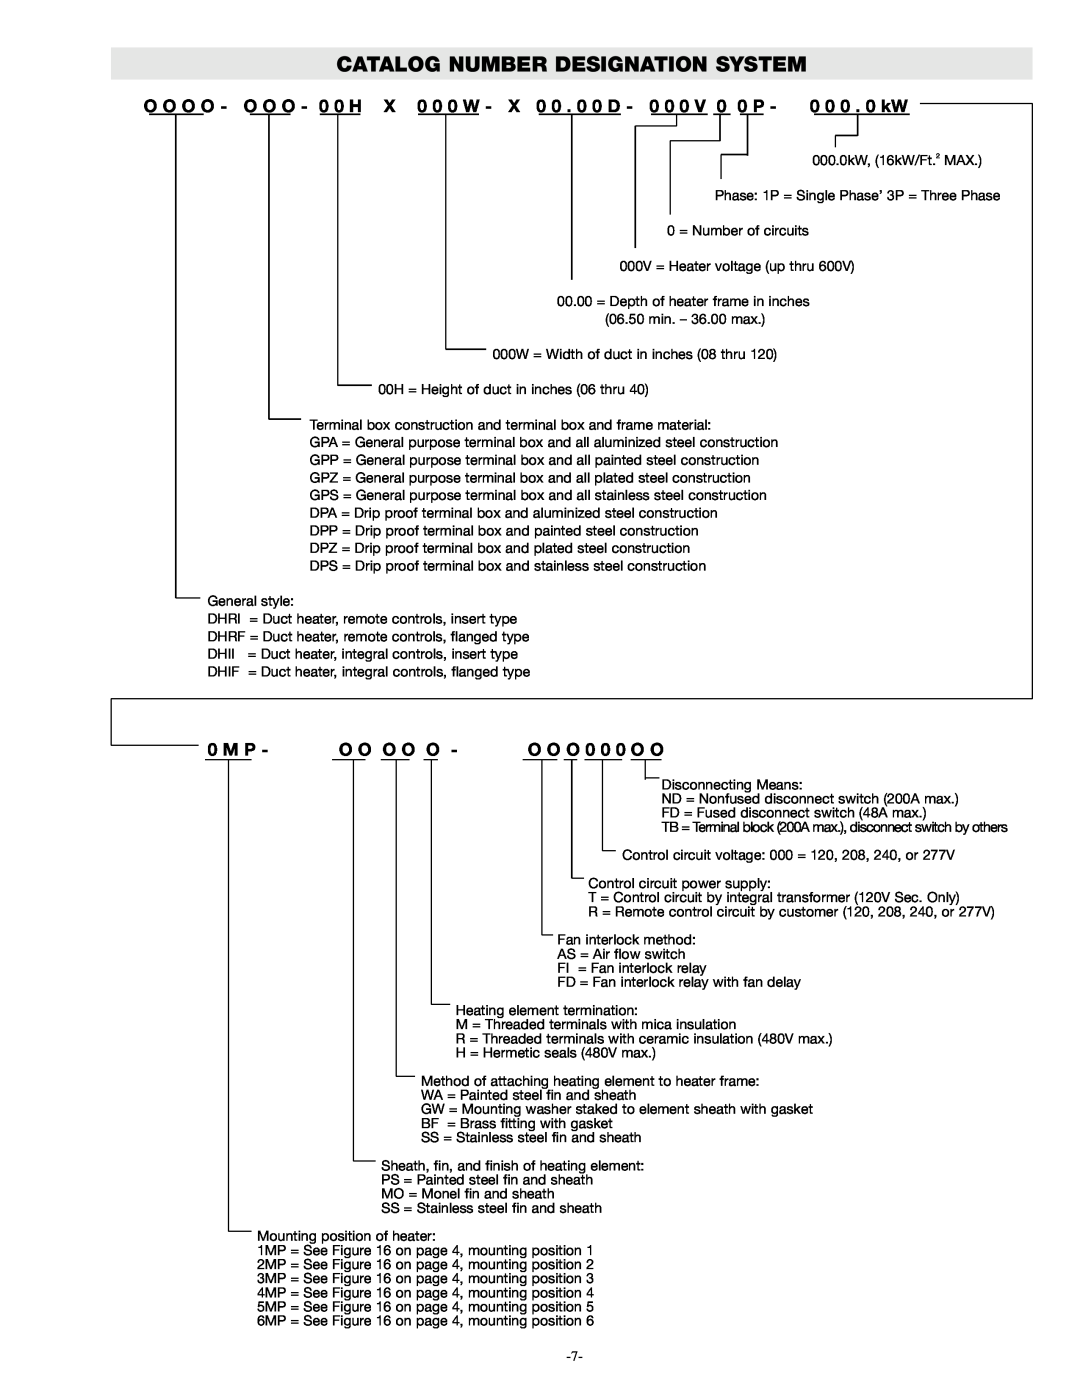 Chromalox PF455-3 manual Catalog Number Designation System, 0 M P, O O O O O, O O O 0 0 0 O O 